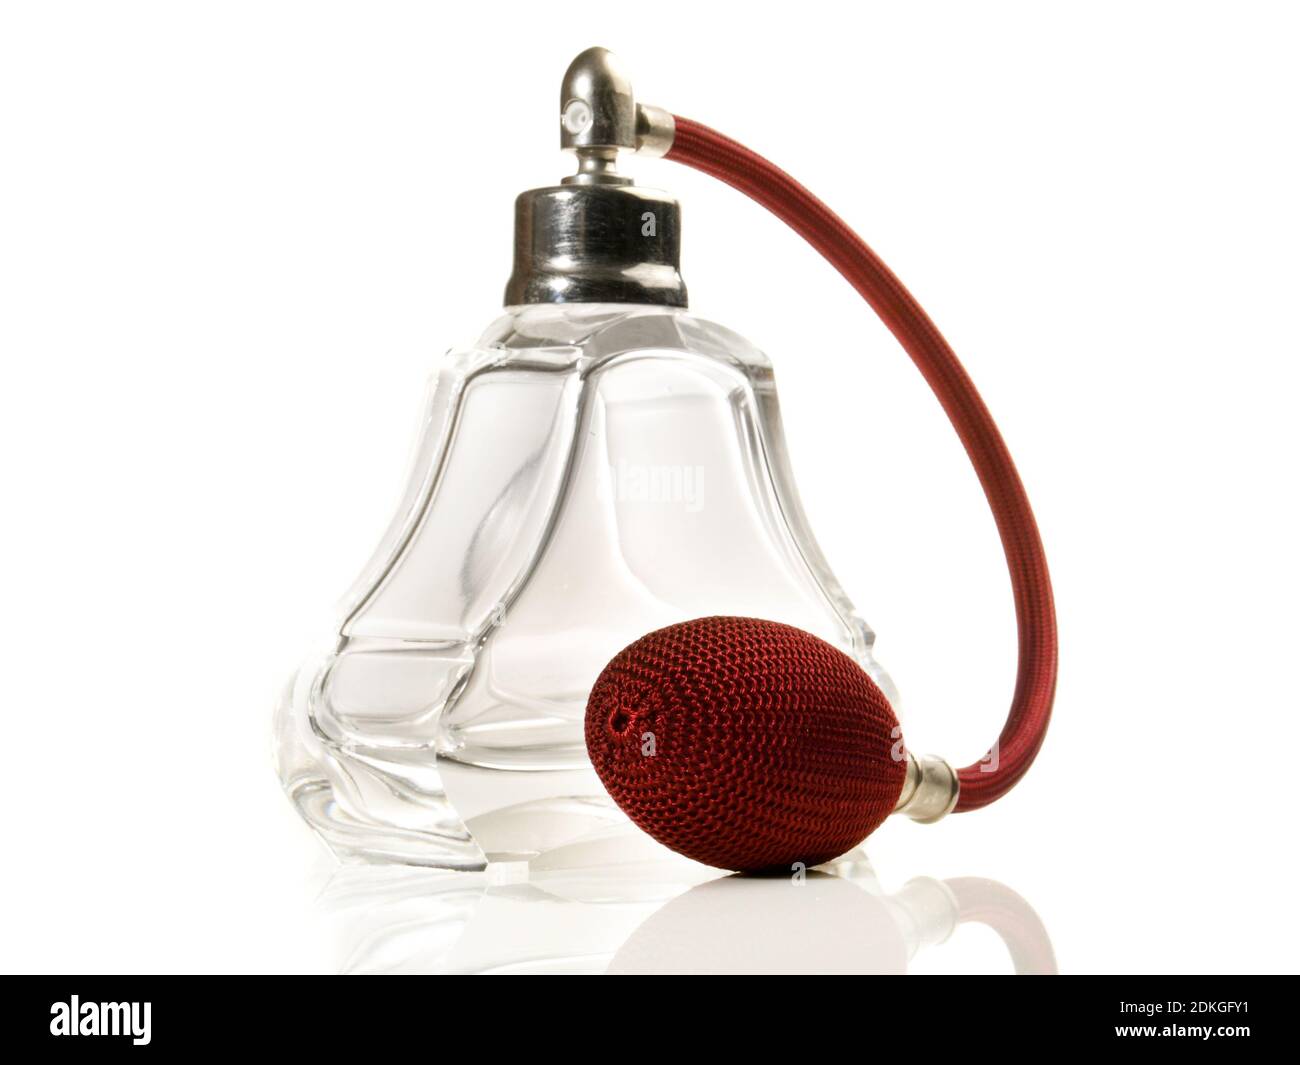 Vintage parfume bottle hi-res stock photography images - Alamy